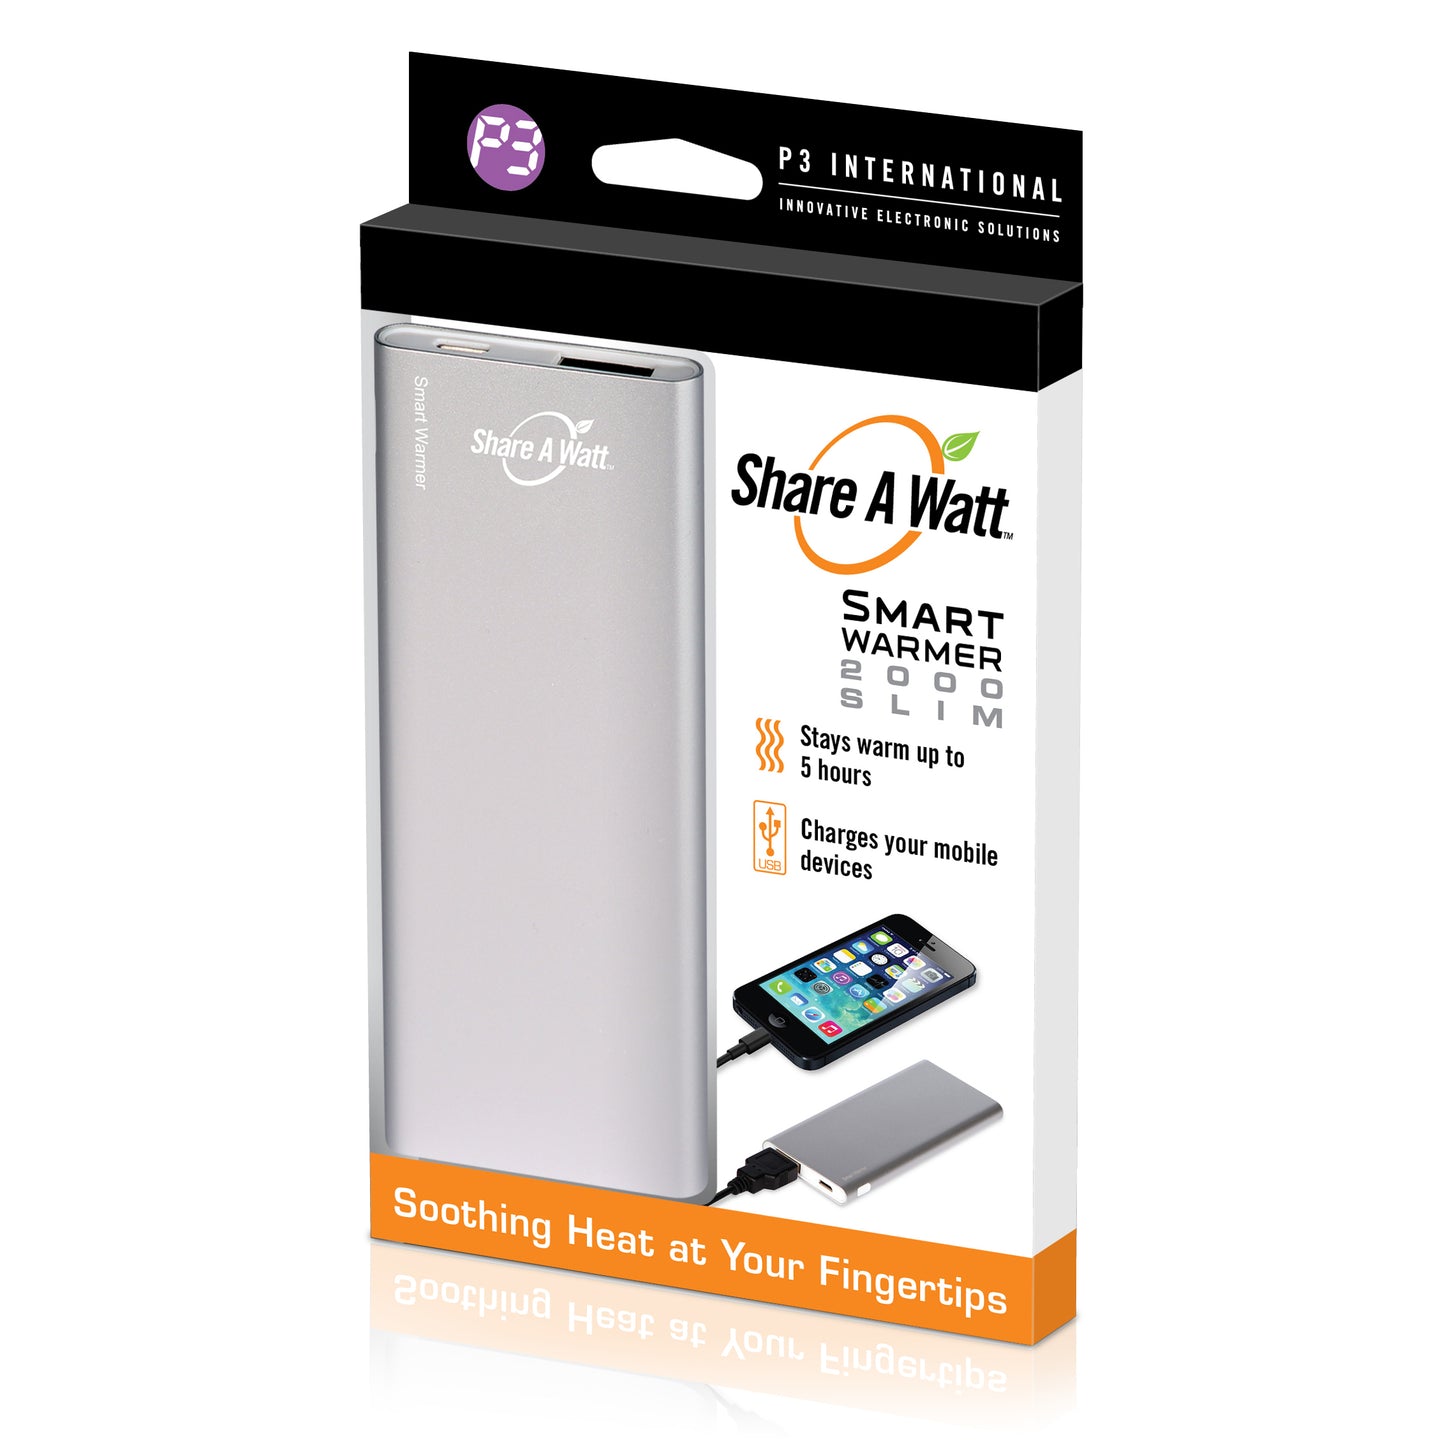 Share A Watt Smart Warmer 2000 Slim